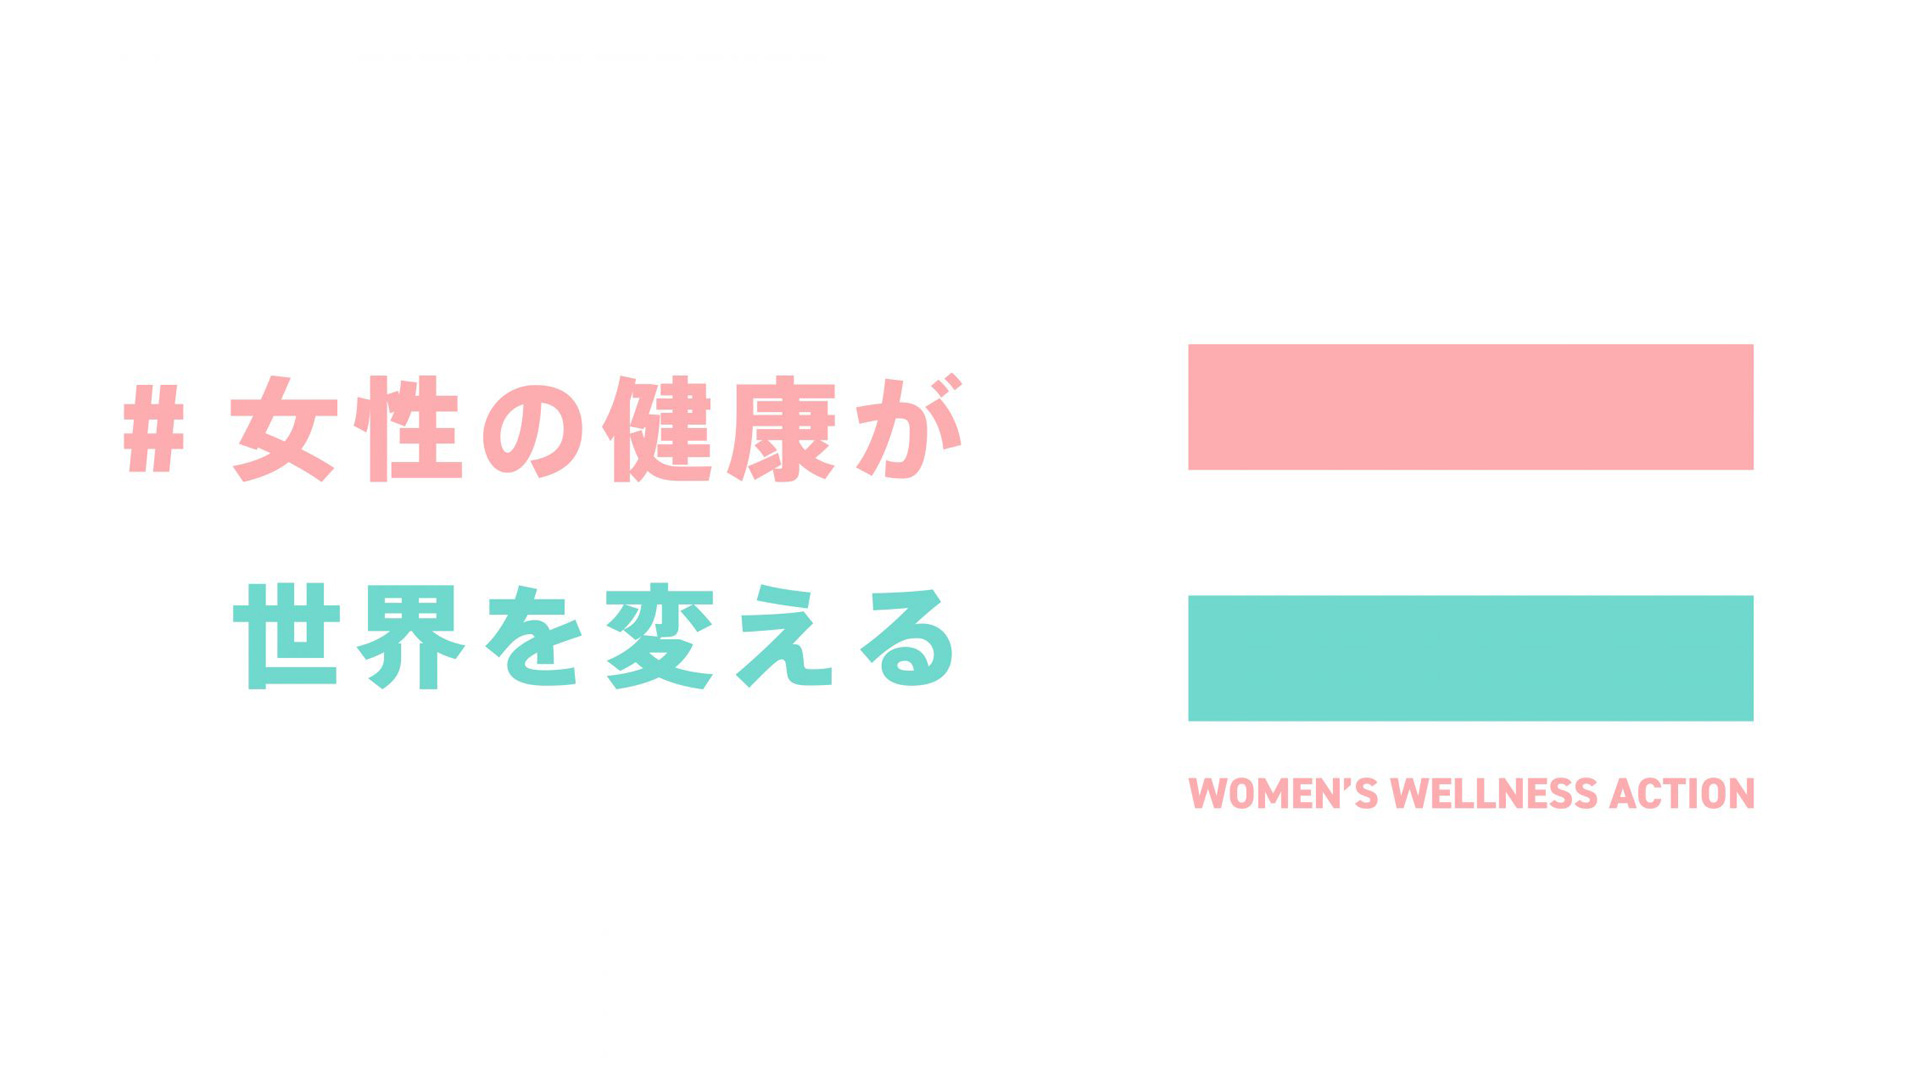 Women’s Wellness Action from Shibuya｜「女性のウェルネス思考」を発信・啓蒙